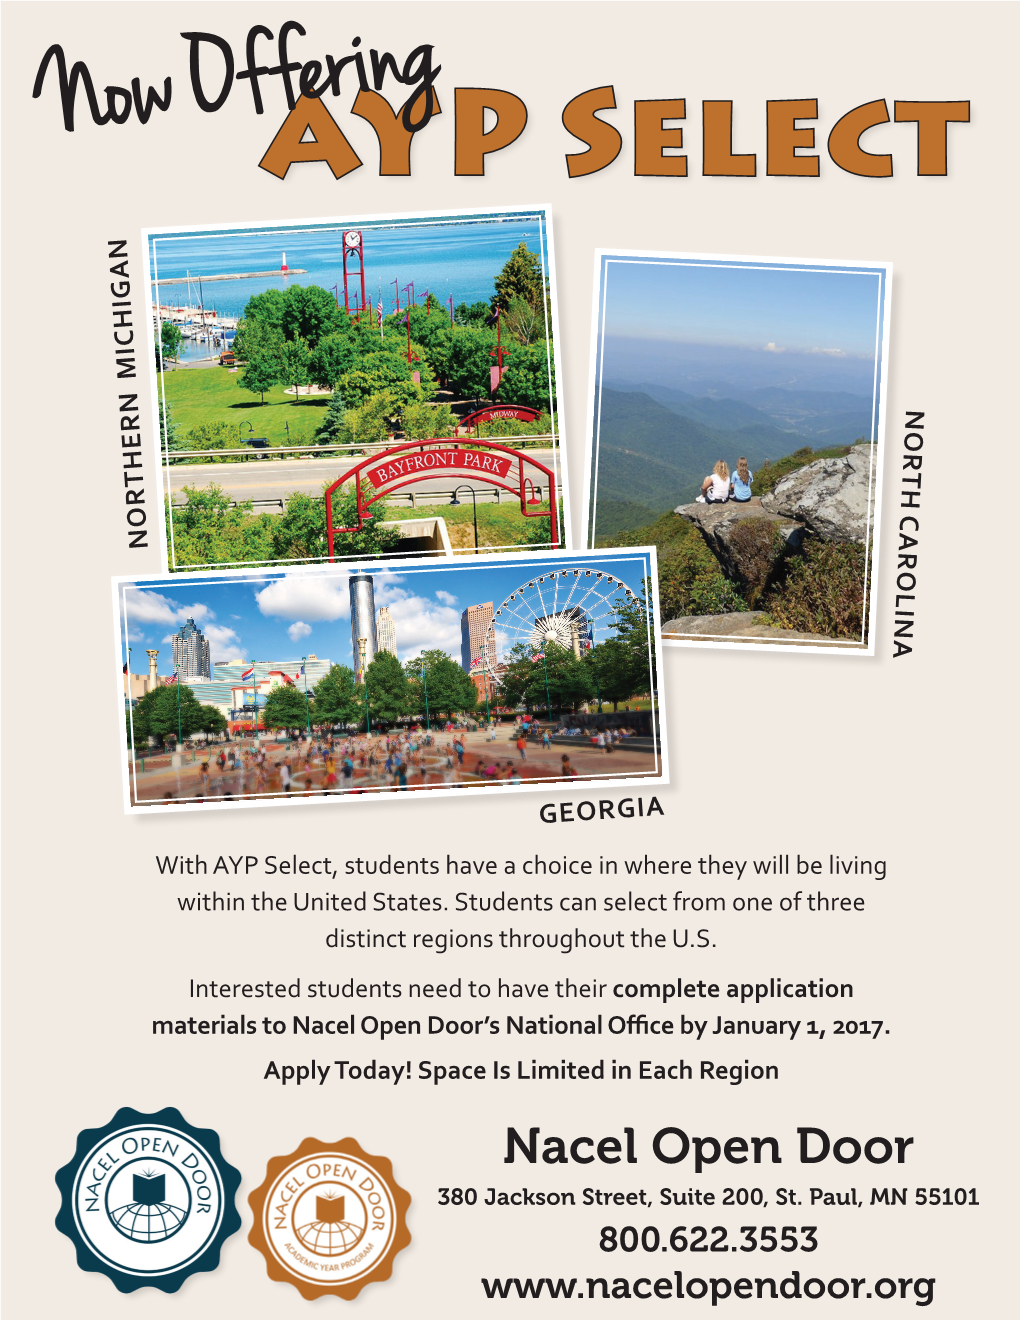 Nacel Open Door’S National Office by January 1, 2017